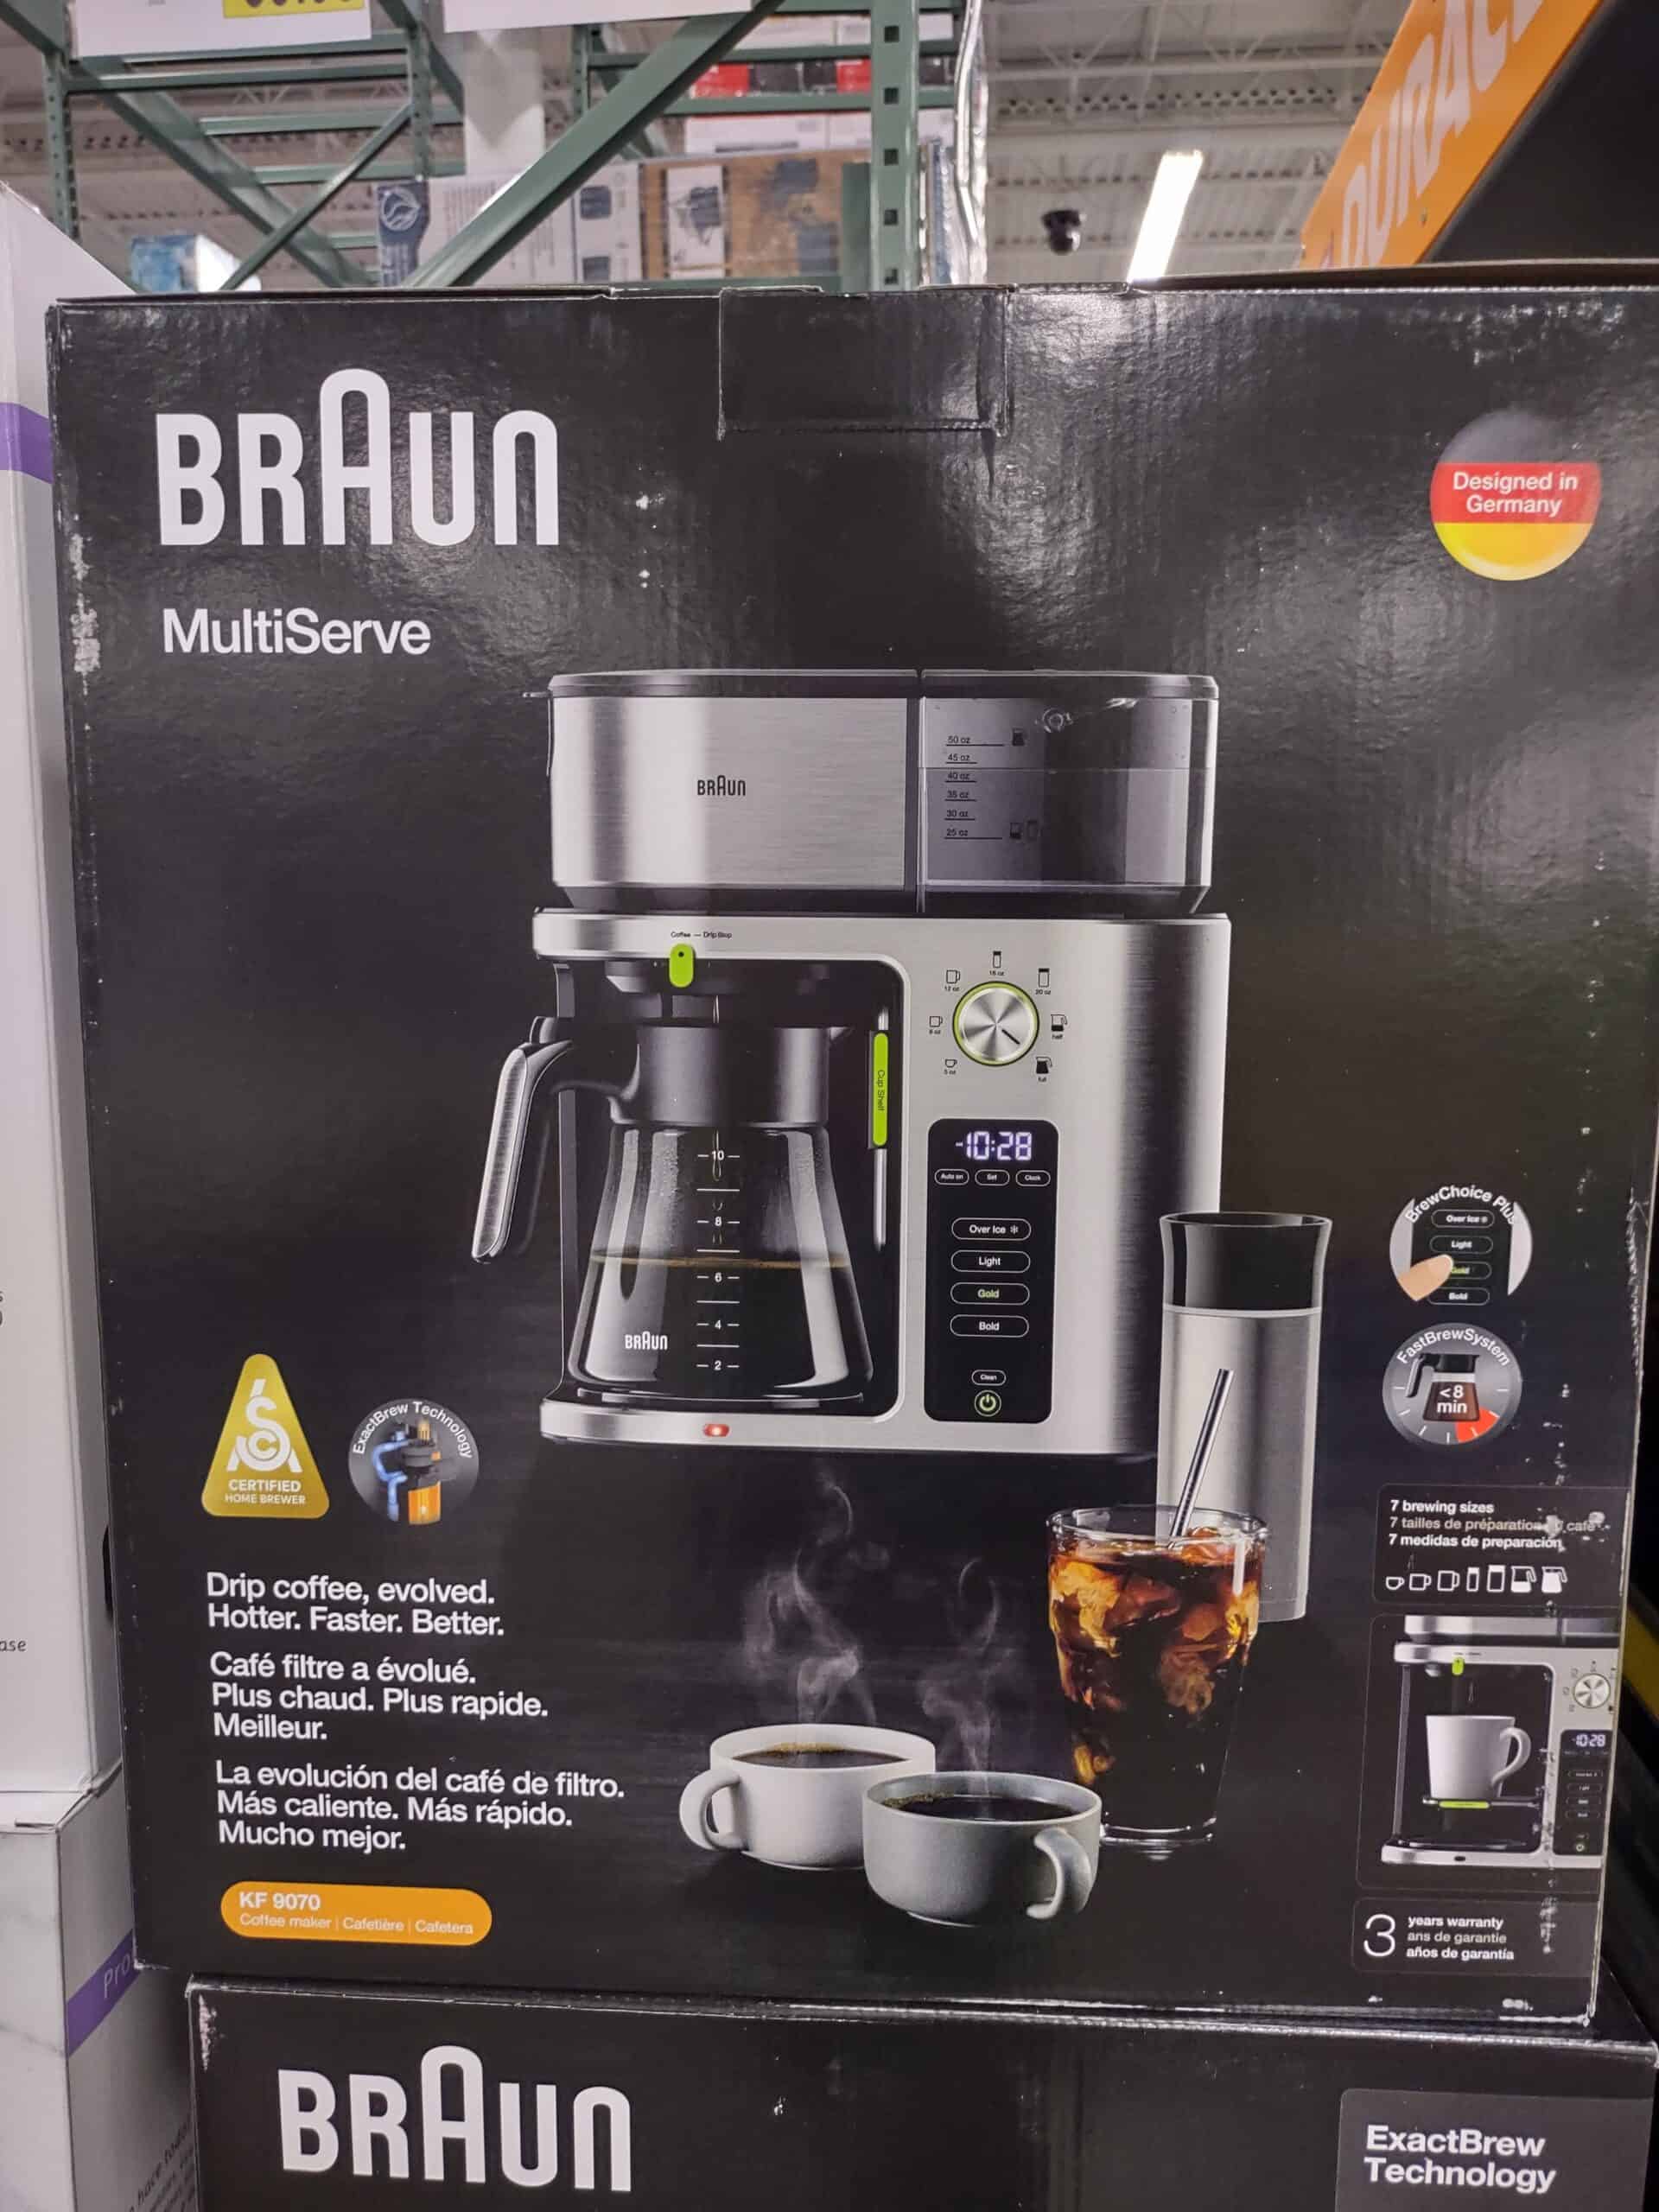 Braun MultiServe Coffee Maker $149.99